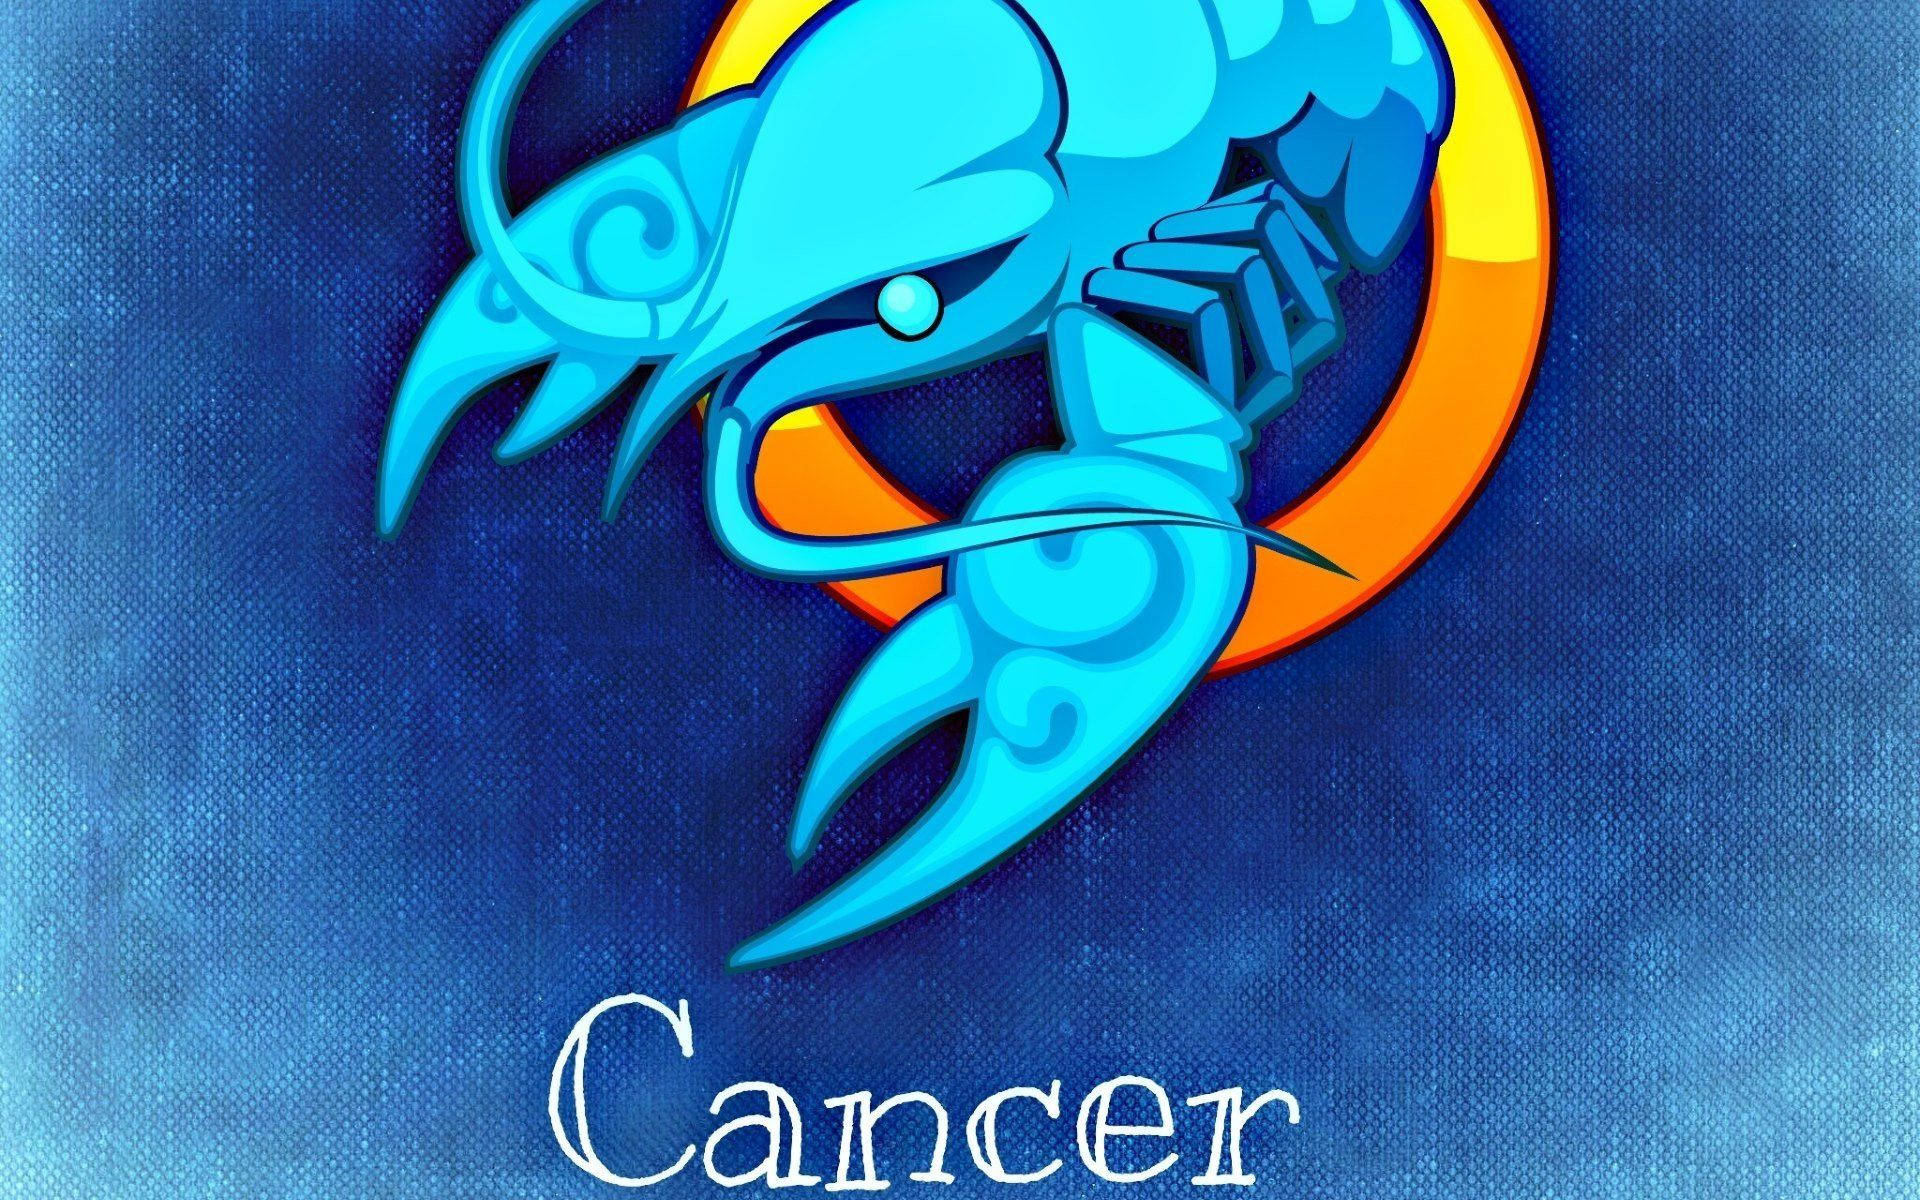 Zodiac Cancer Sign With Blue Crayfish Symbol Background